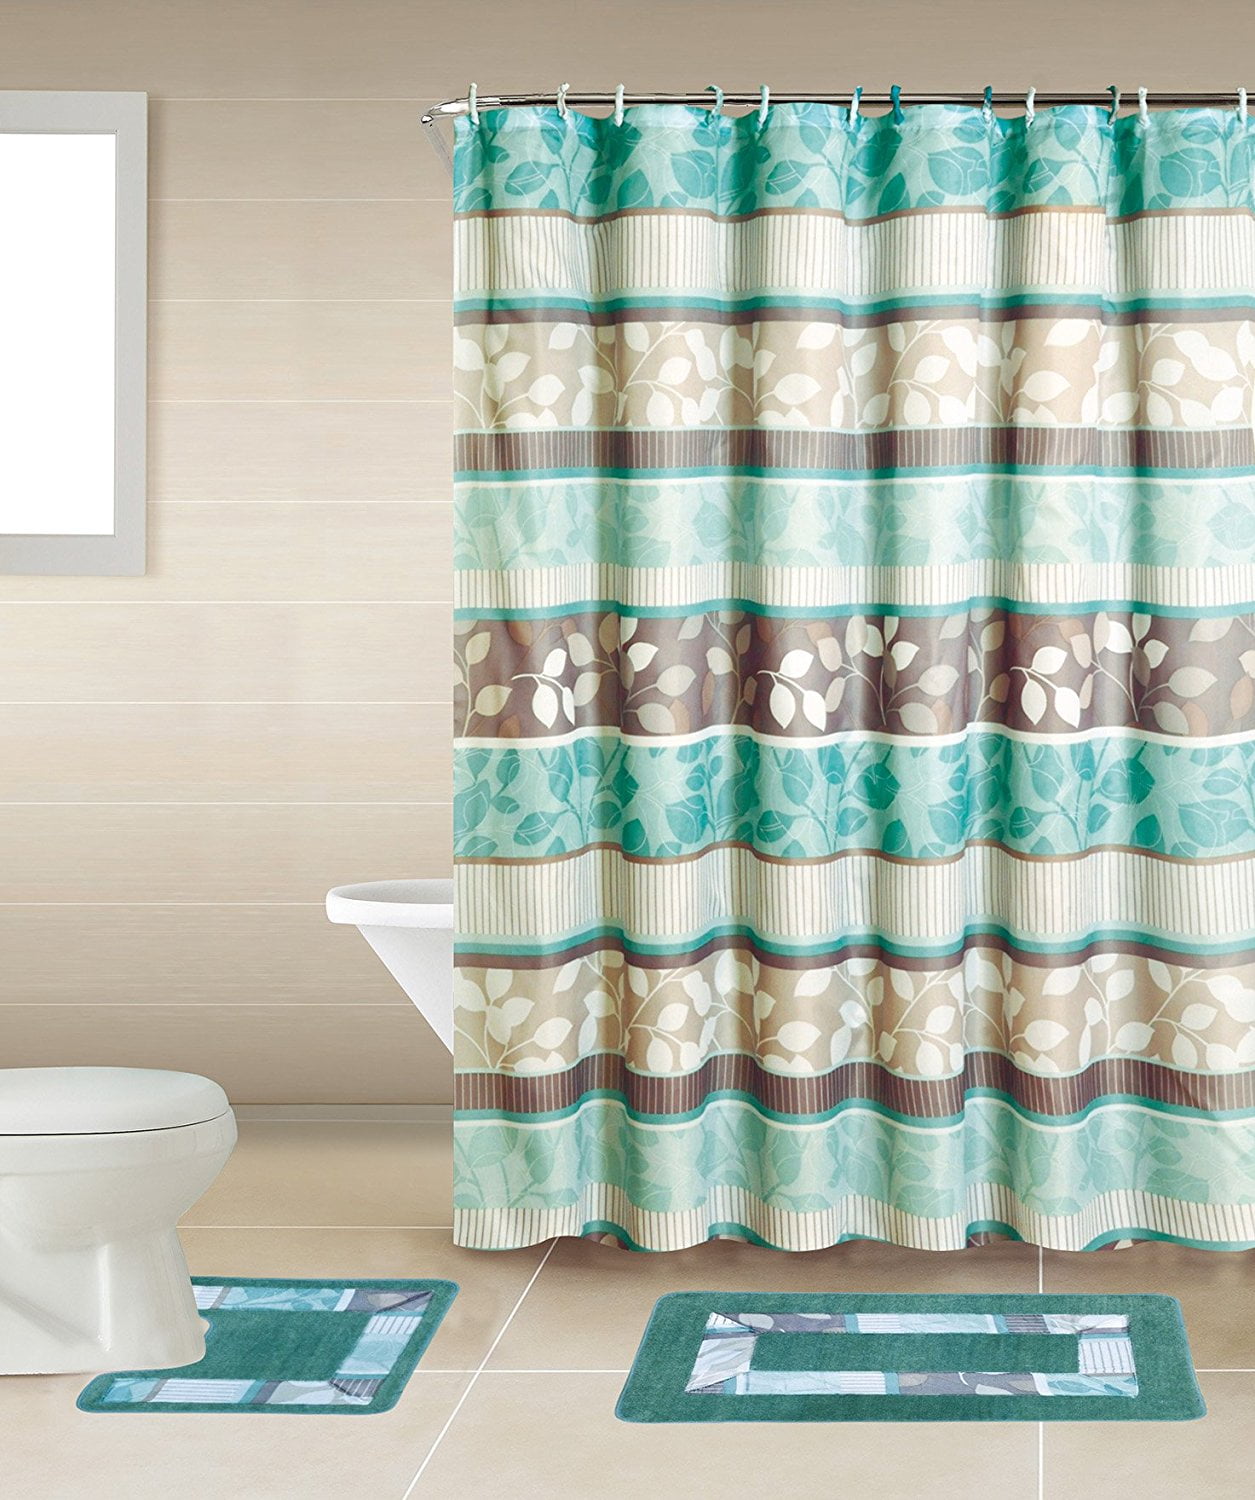 Libaoge Fresh Design Cute Bubble Green Sea Turtle Waterproof Fabric Polyester Shower Curtain Bathroom Decor 72x72 Inch Your Home Choice